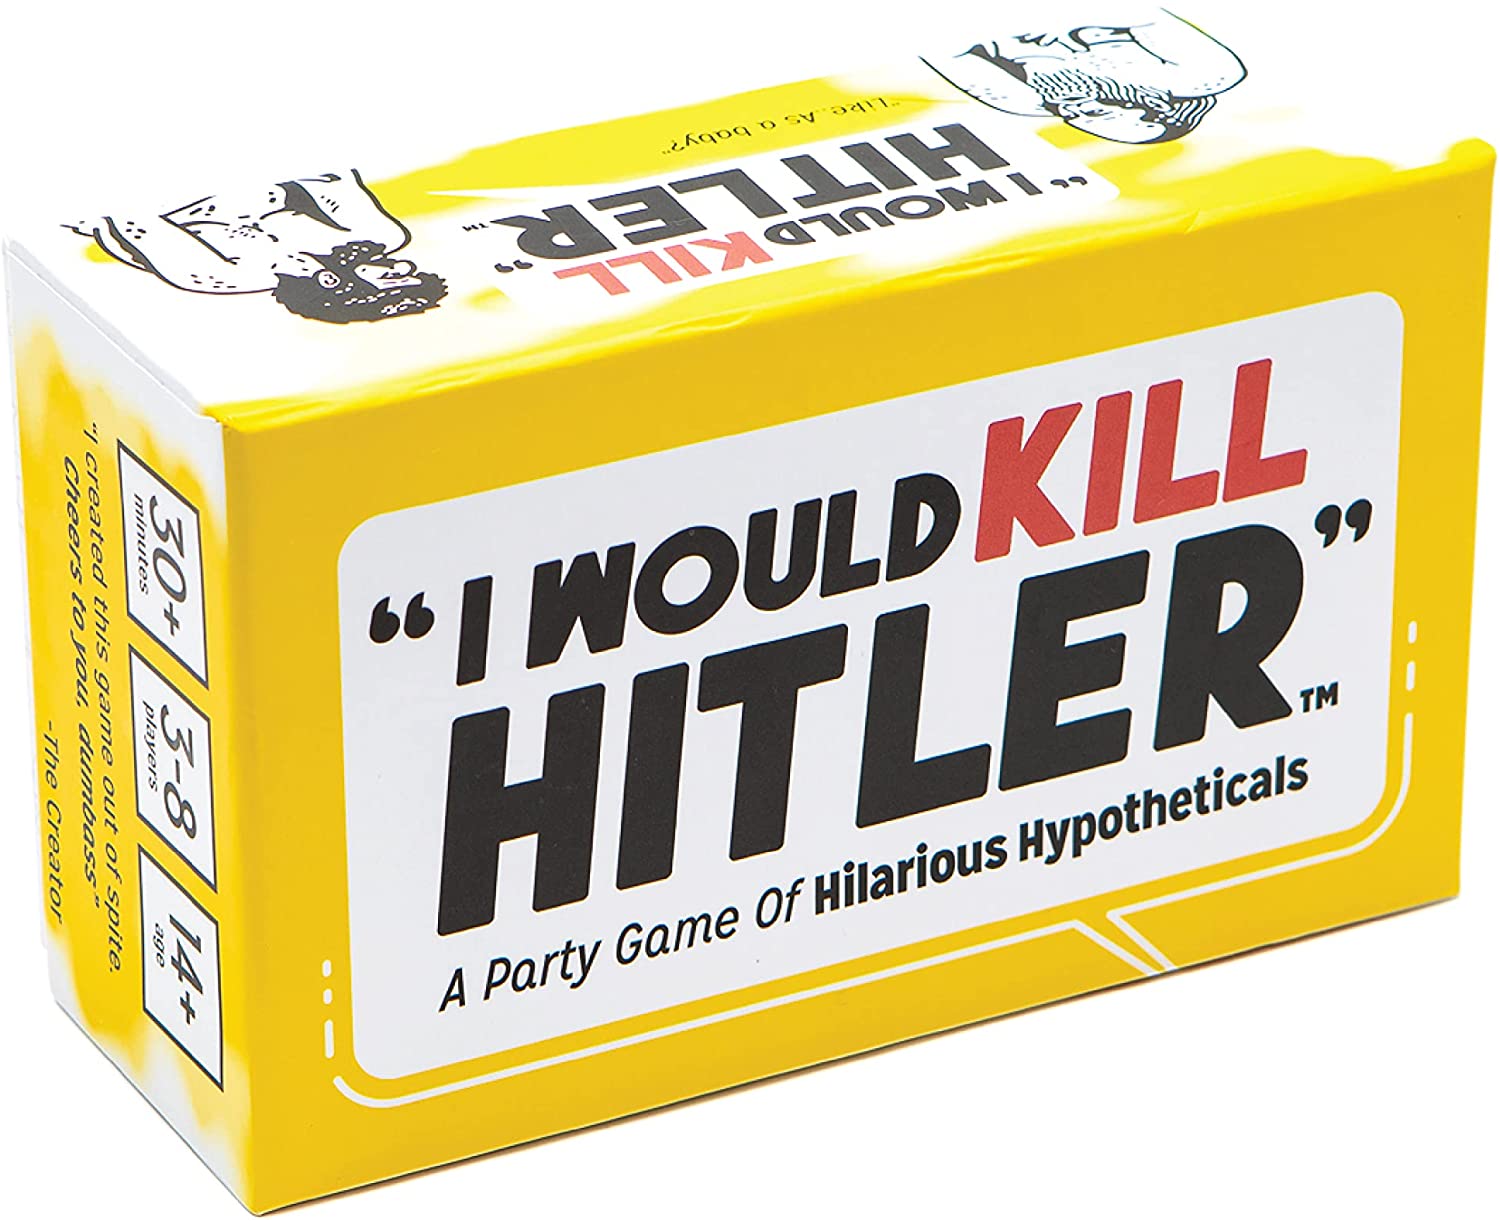 Hitler pokemon card